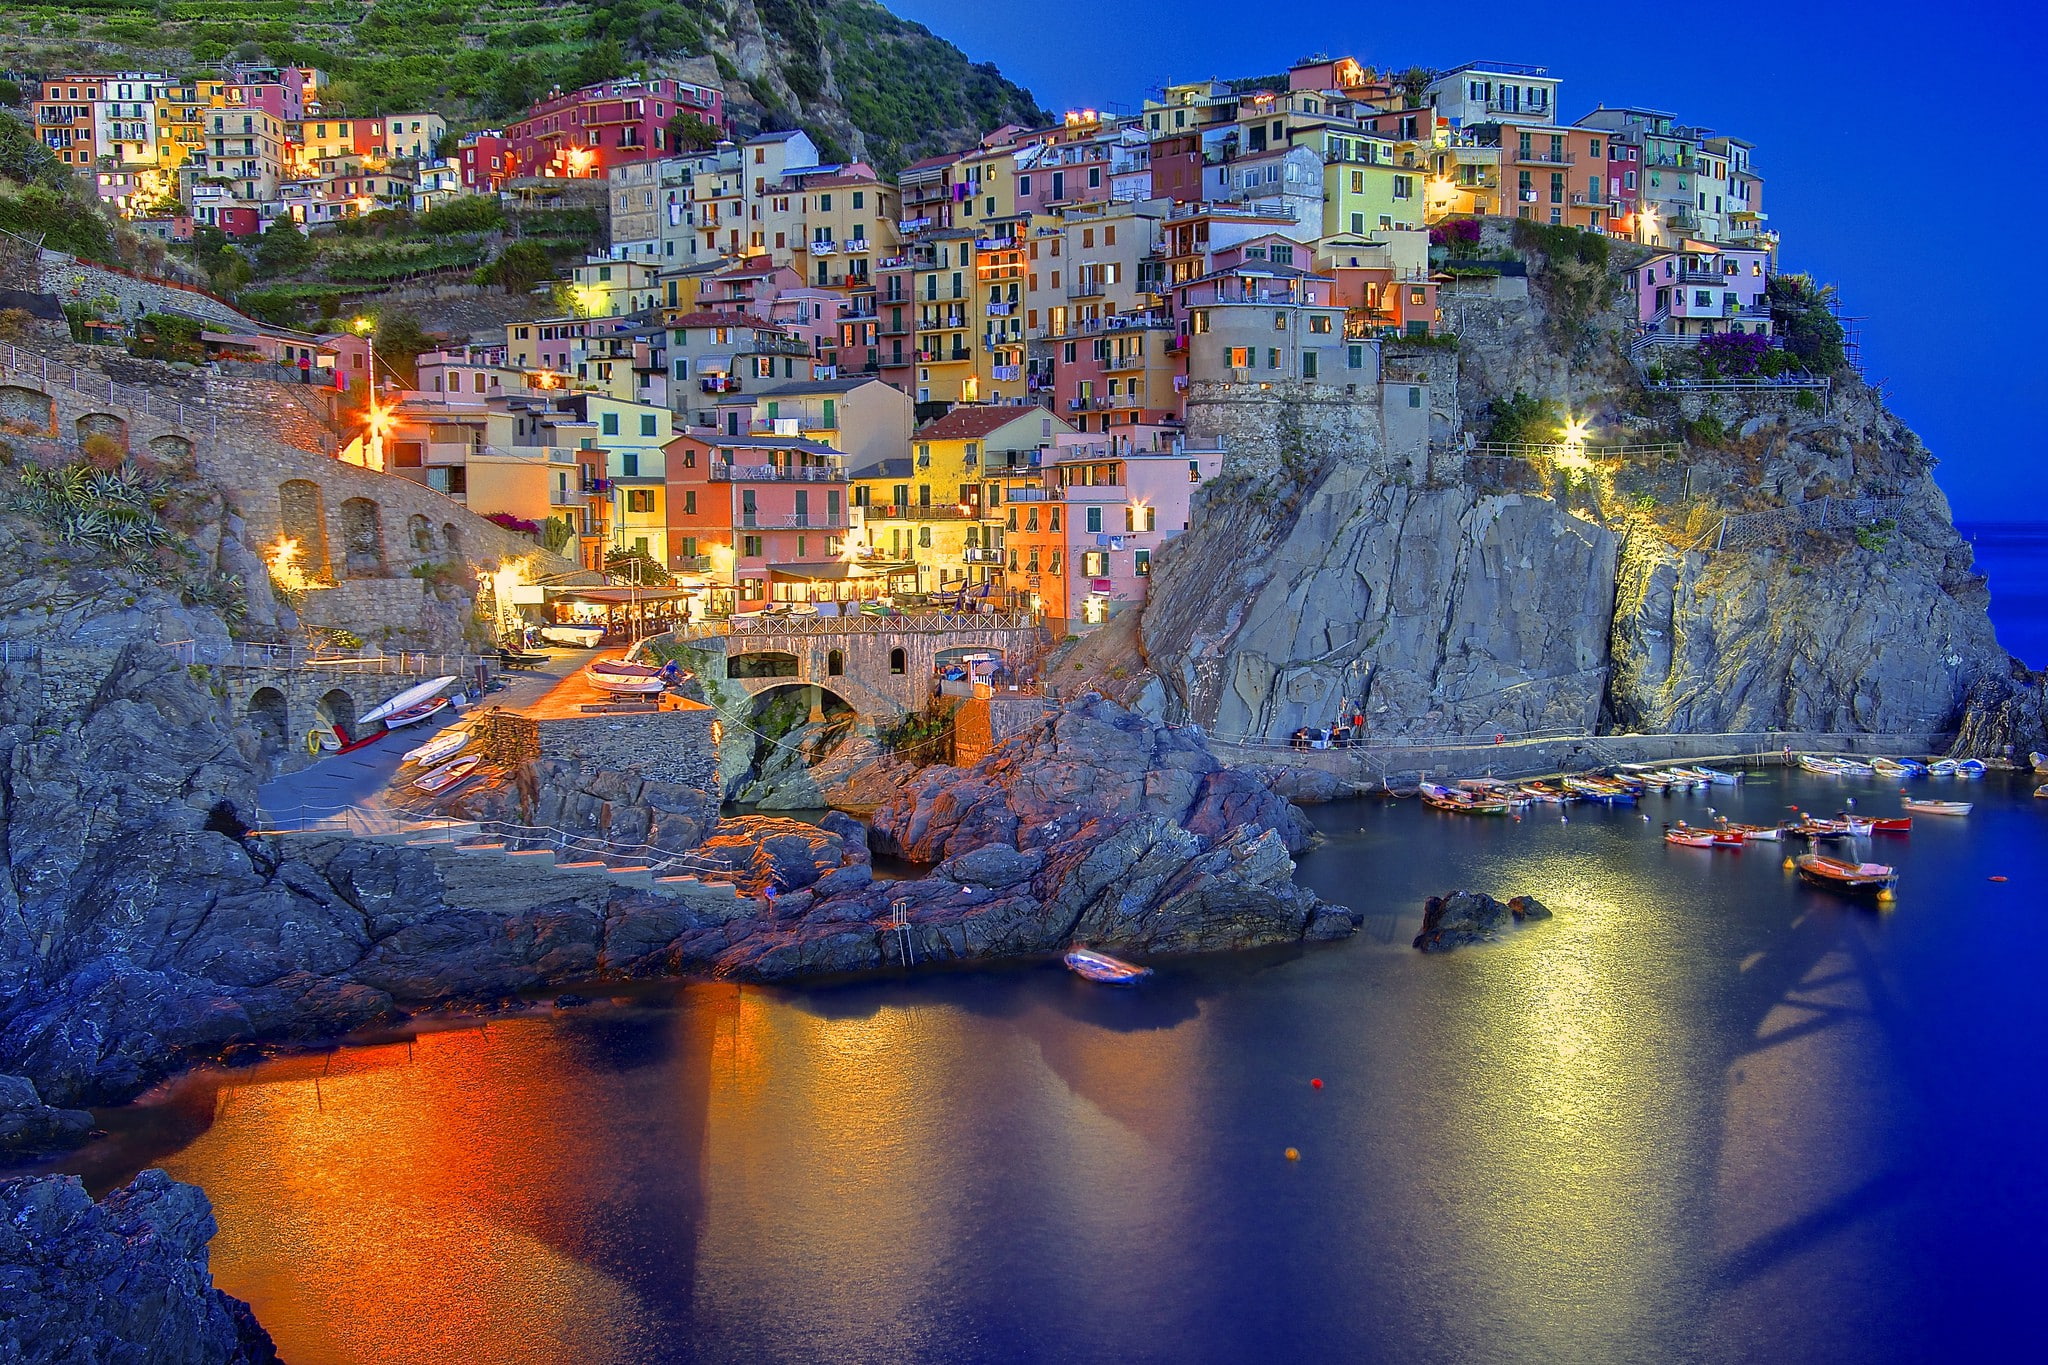 Italy, Liguria, Manarola, concrete houses lot near body of water ]